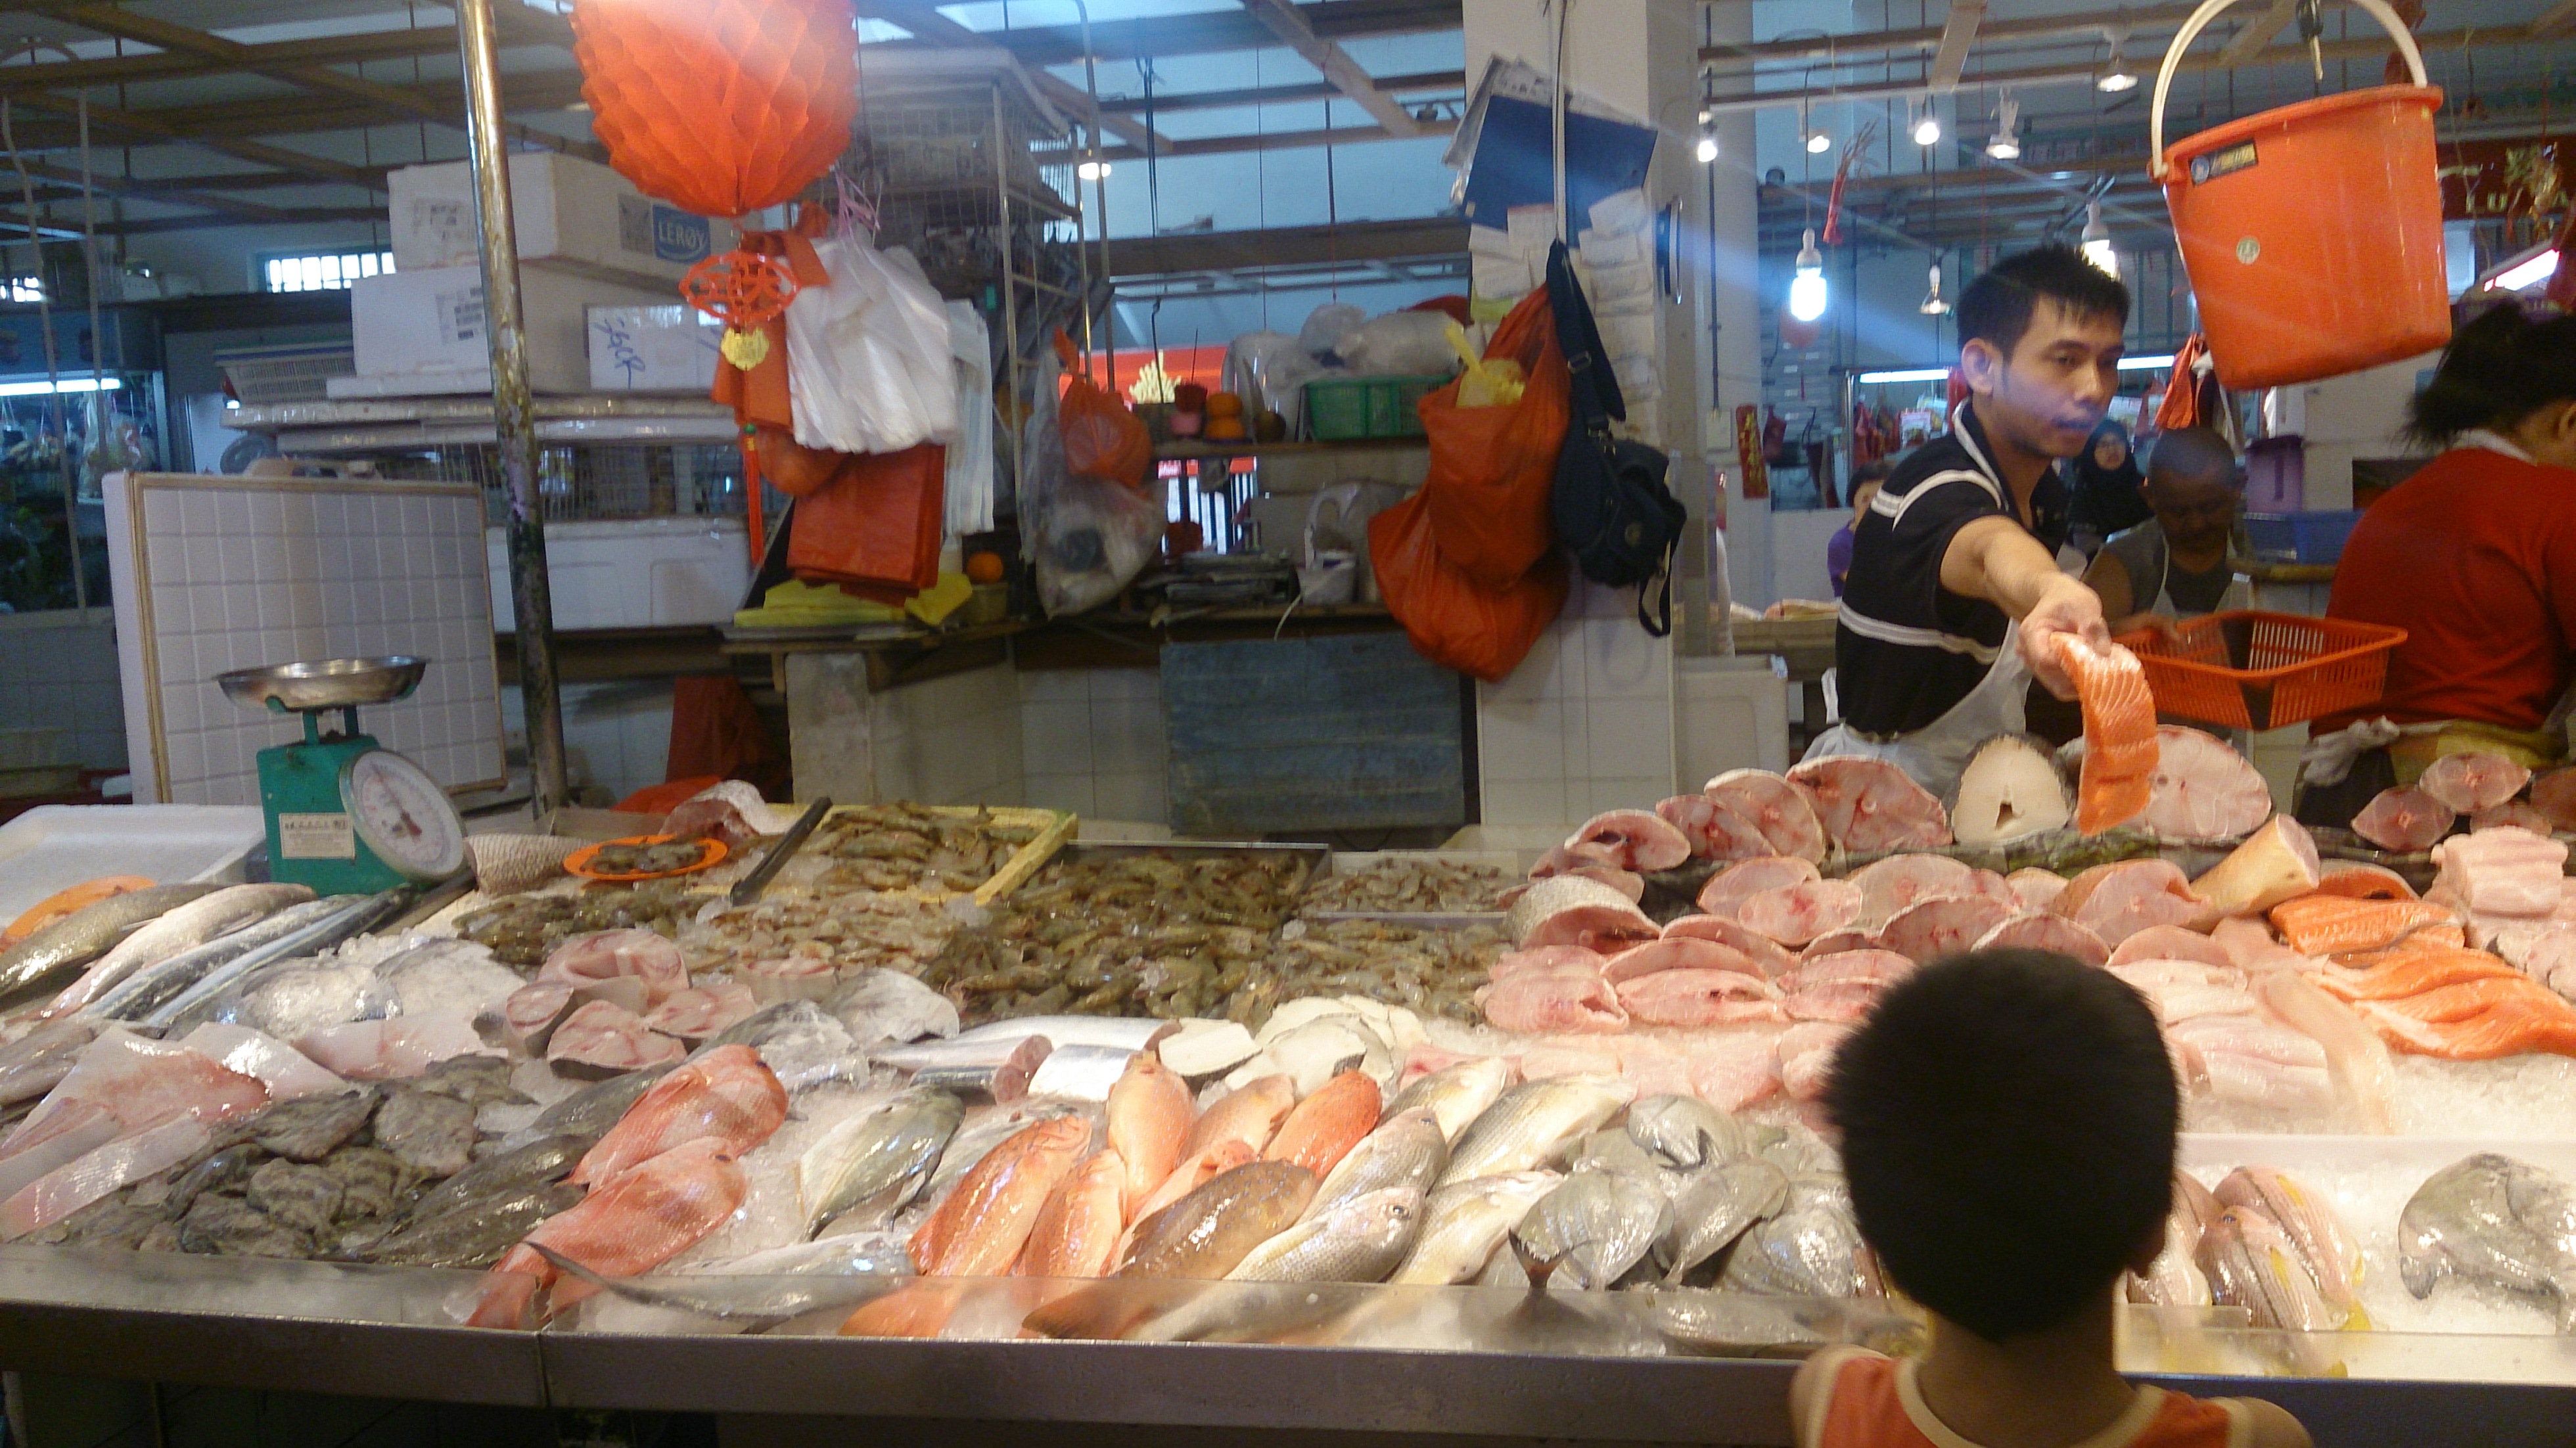 File:Fish stall at wet market, Singapore 2.jpg - Wikimedia Commons